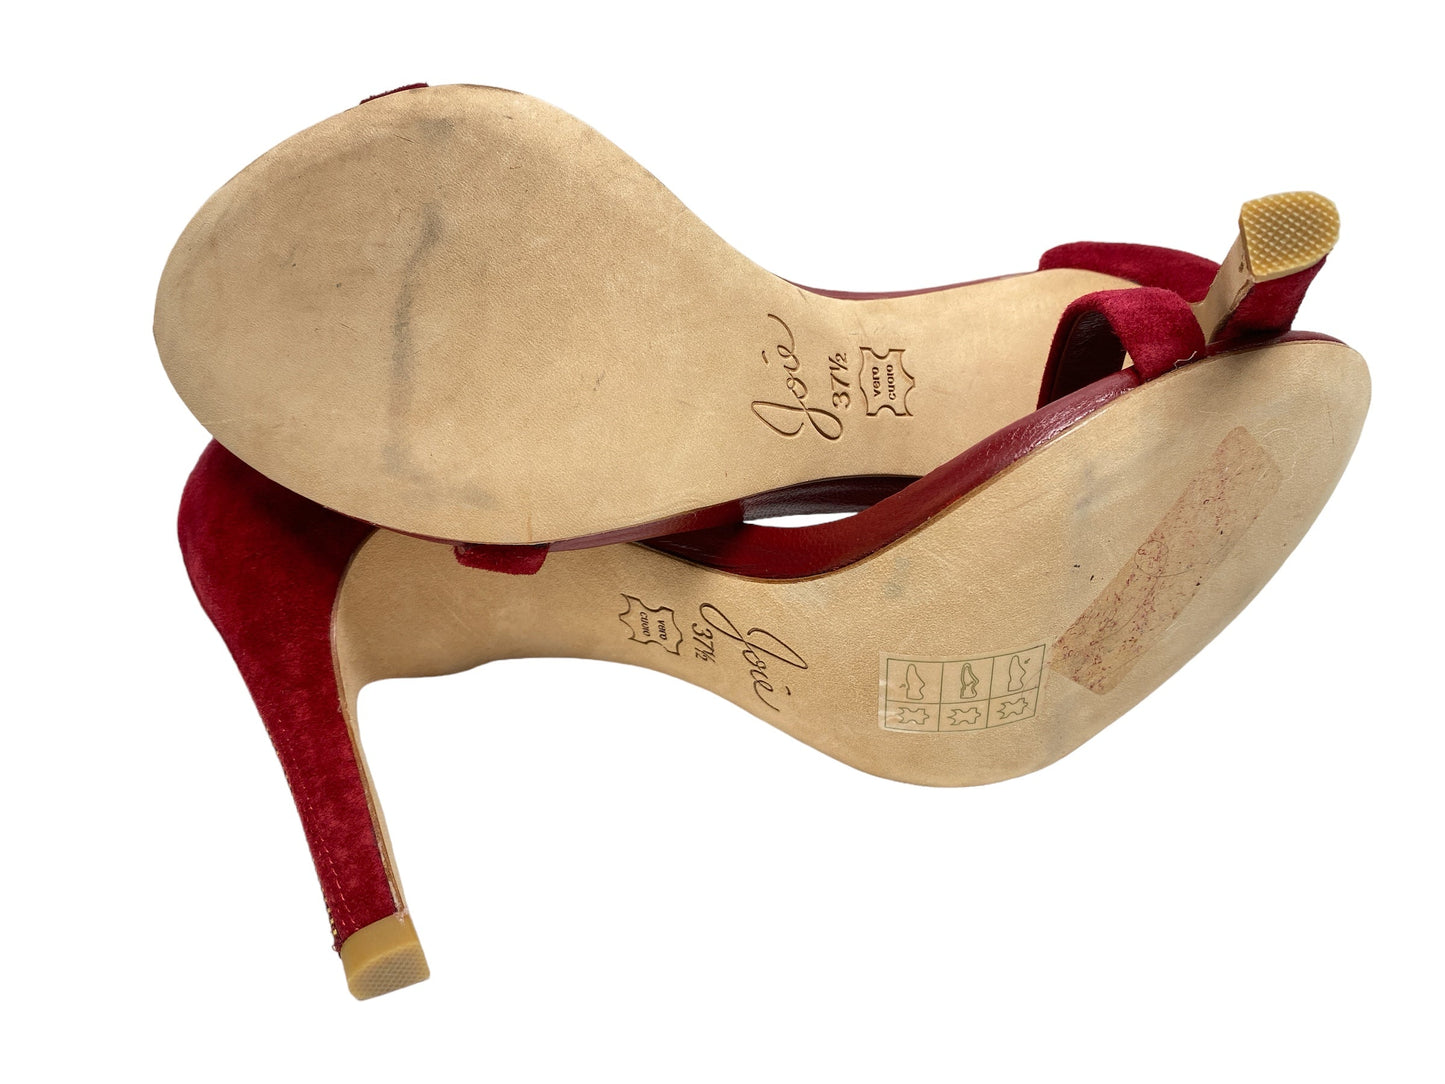 Sandals Heels Stiletto By Joie  Size: 7.5